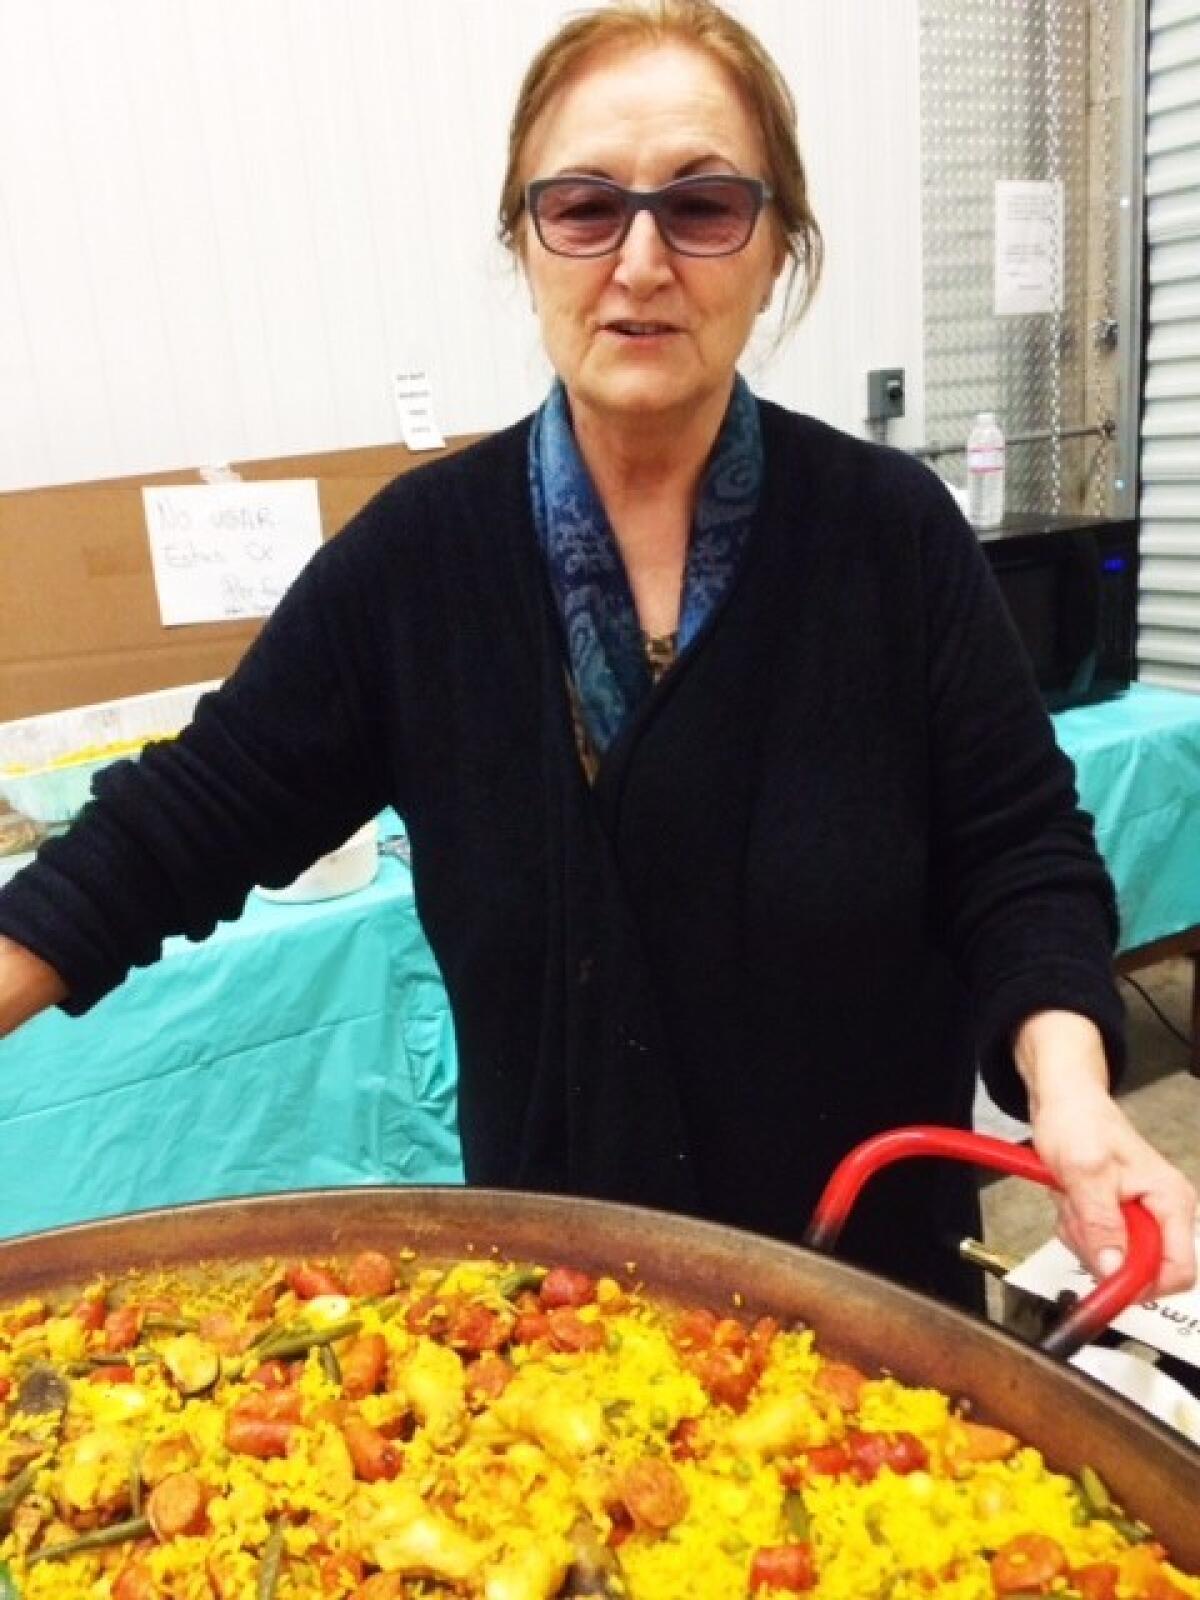 Doña Juana Faraone prepares paella in a giant pan.